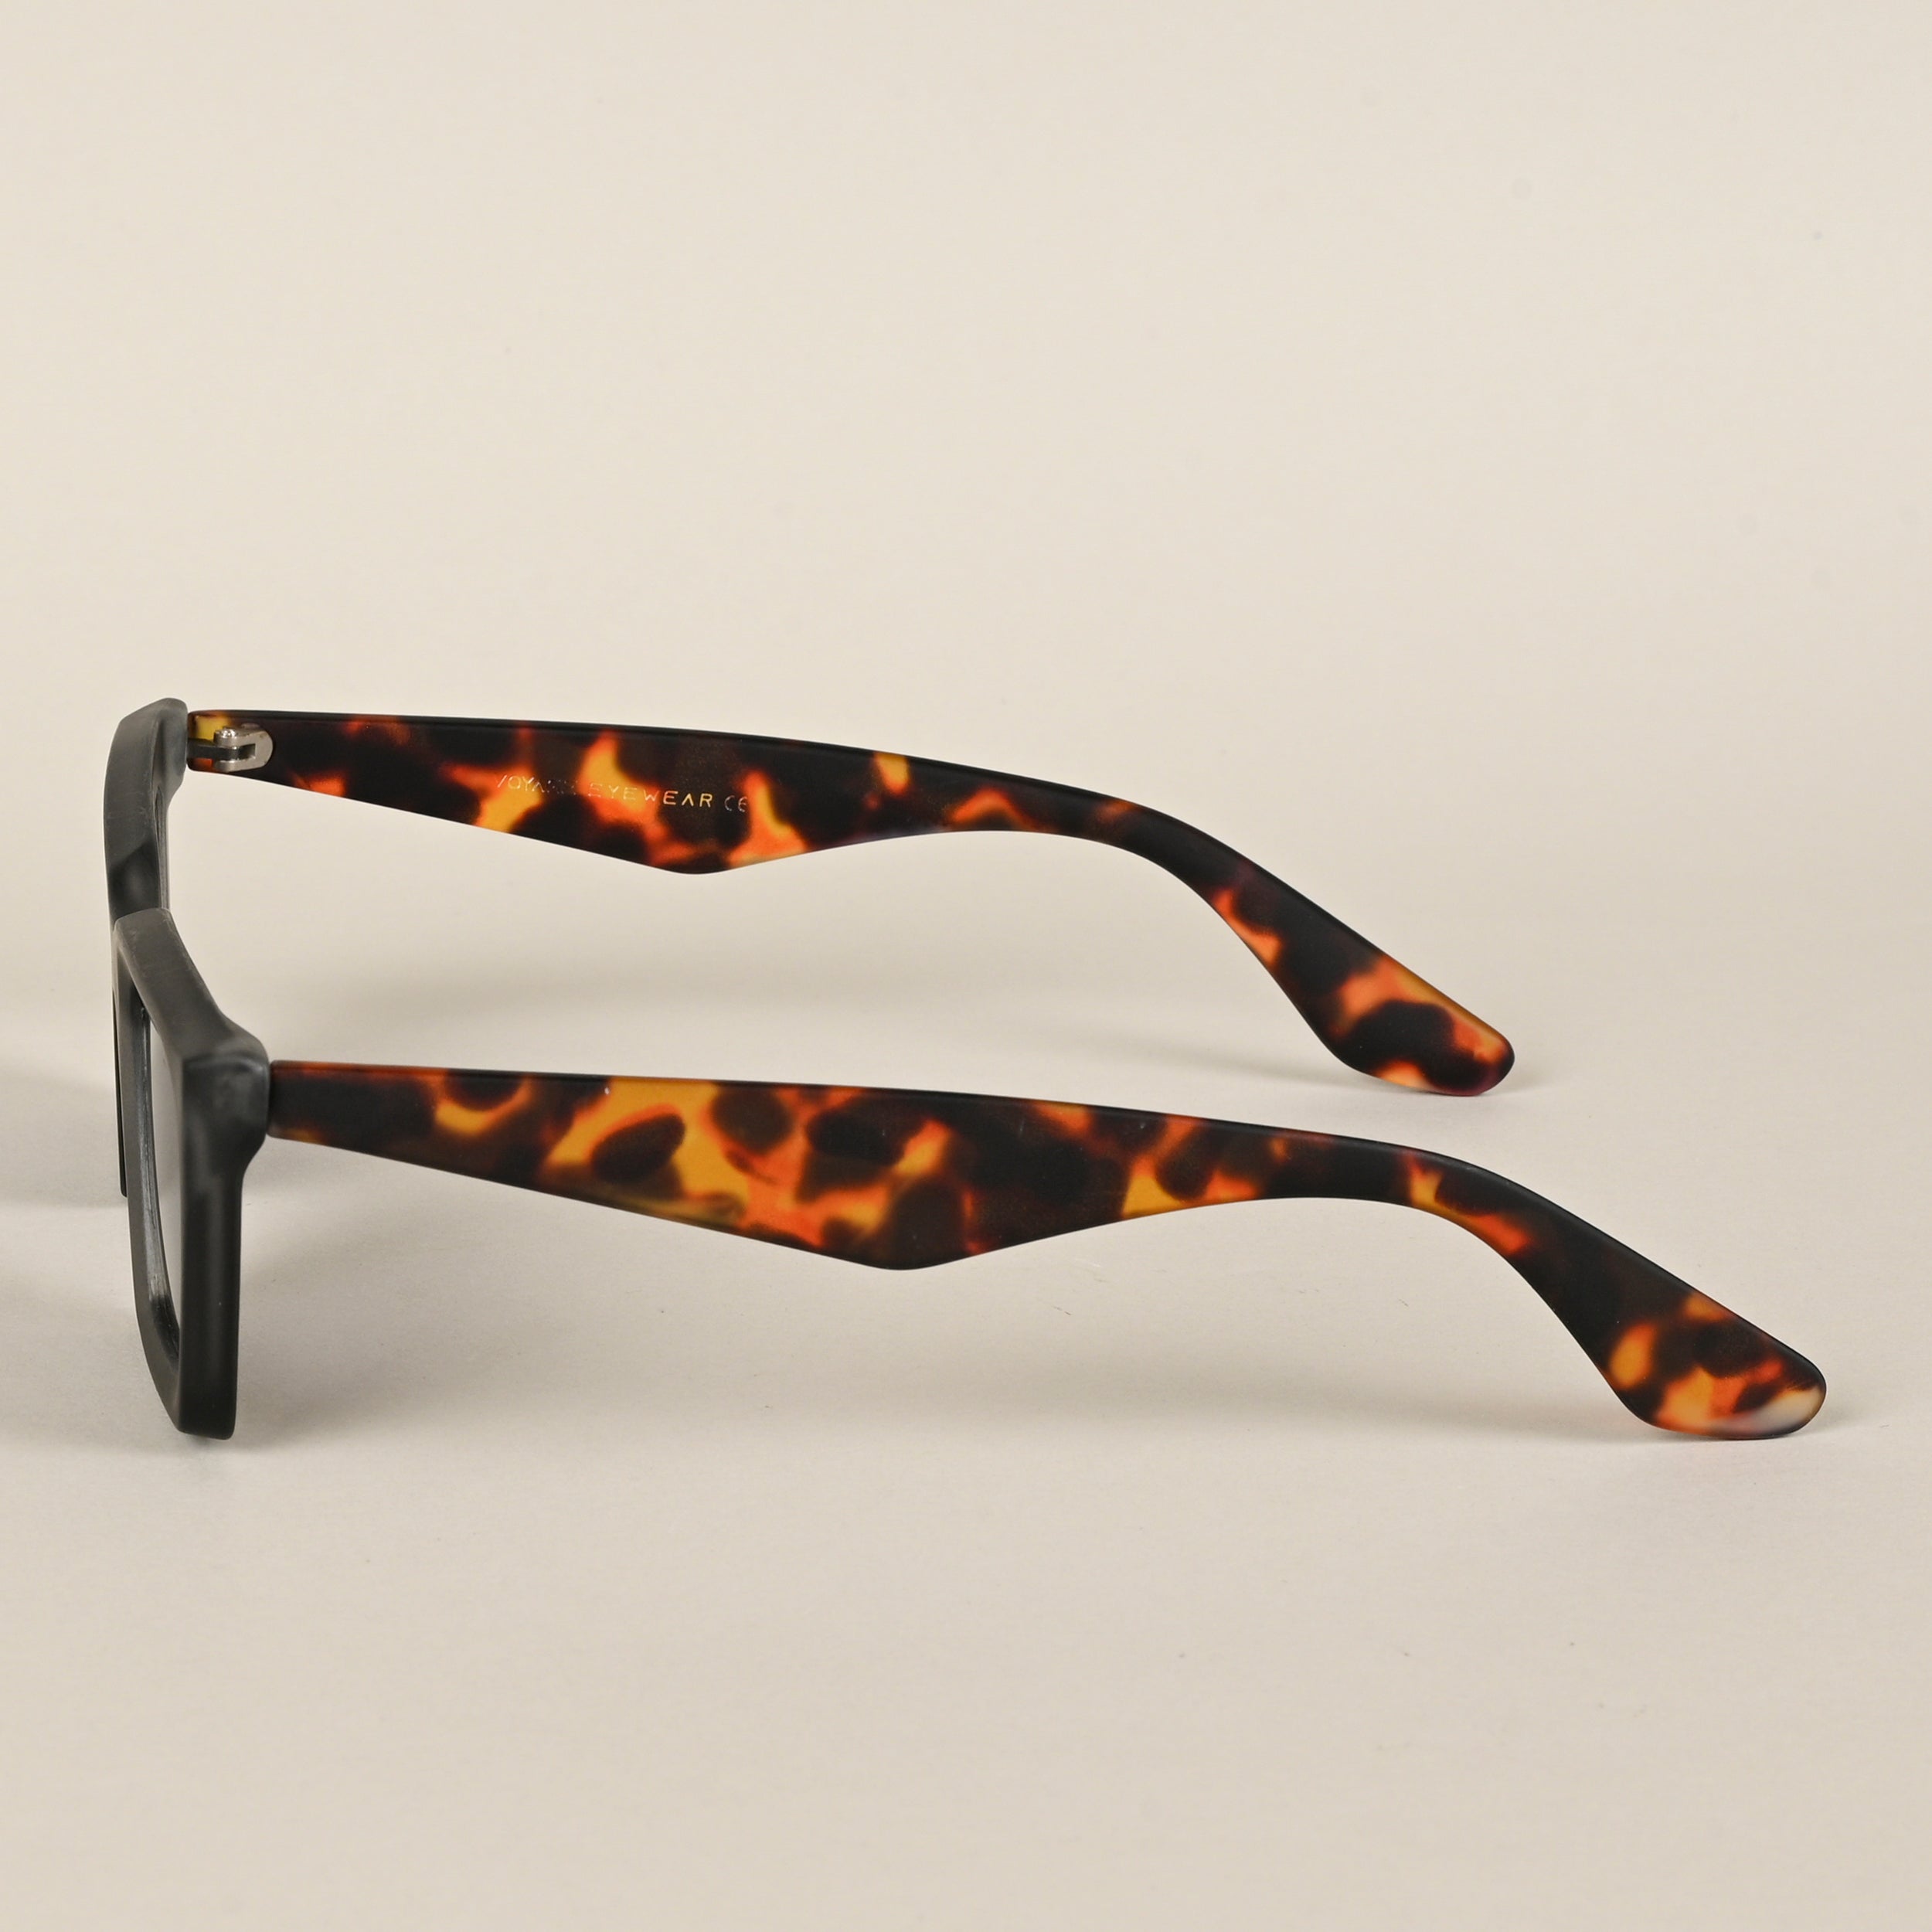 Voyage Black Wayfarer Sunglasses for Men & Women - MG4124